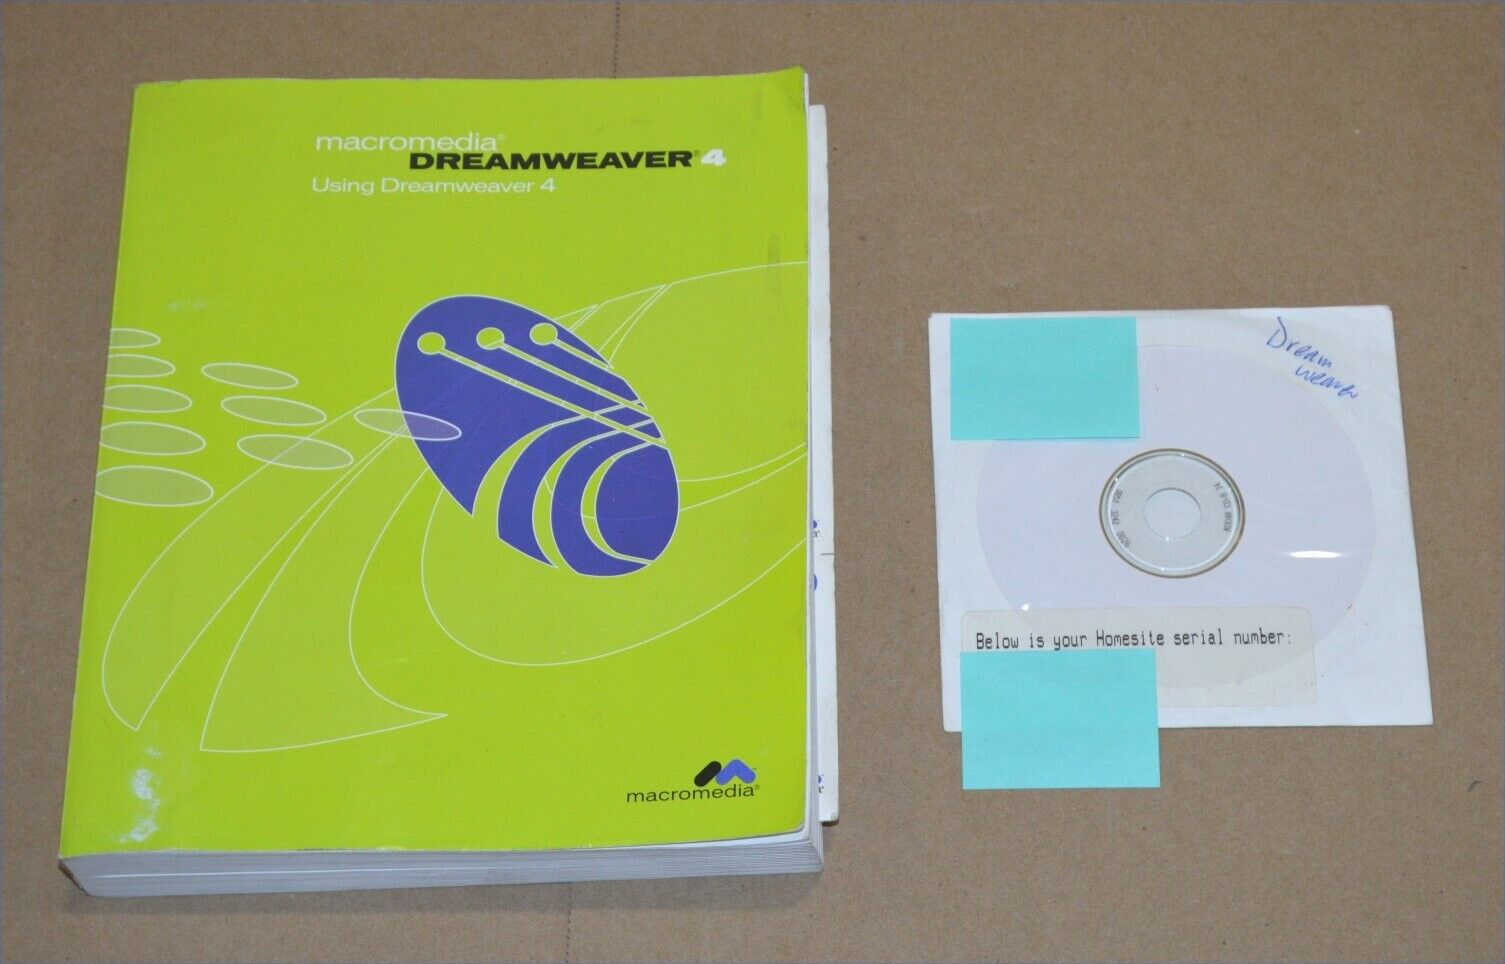 Macromedia Dreamweaver 4 Using Dreamweaver 4 Book and CD